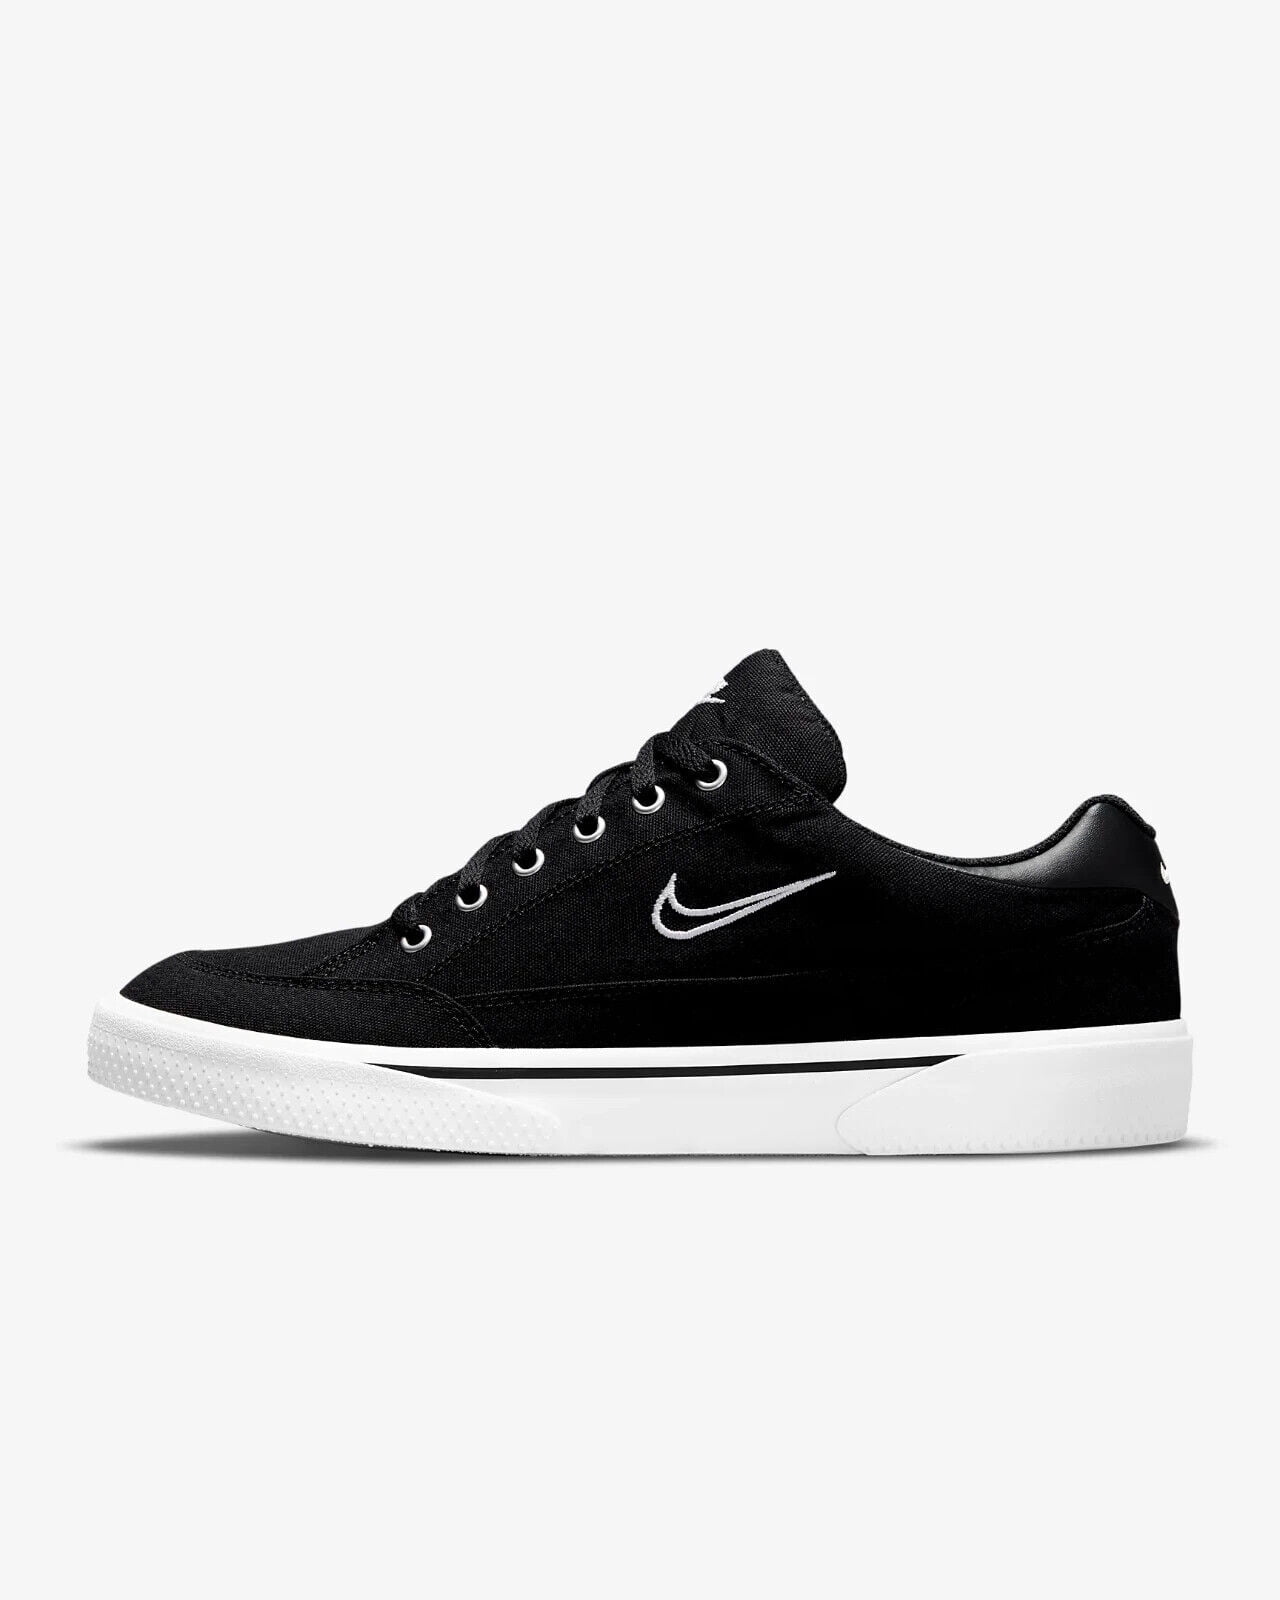 Draaien bezorgdheid Koken Nike Retro GTS Shoes Black White DA1446-001 Multiple Sizes - Walmart.com